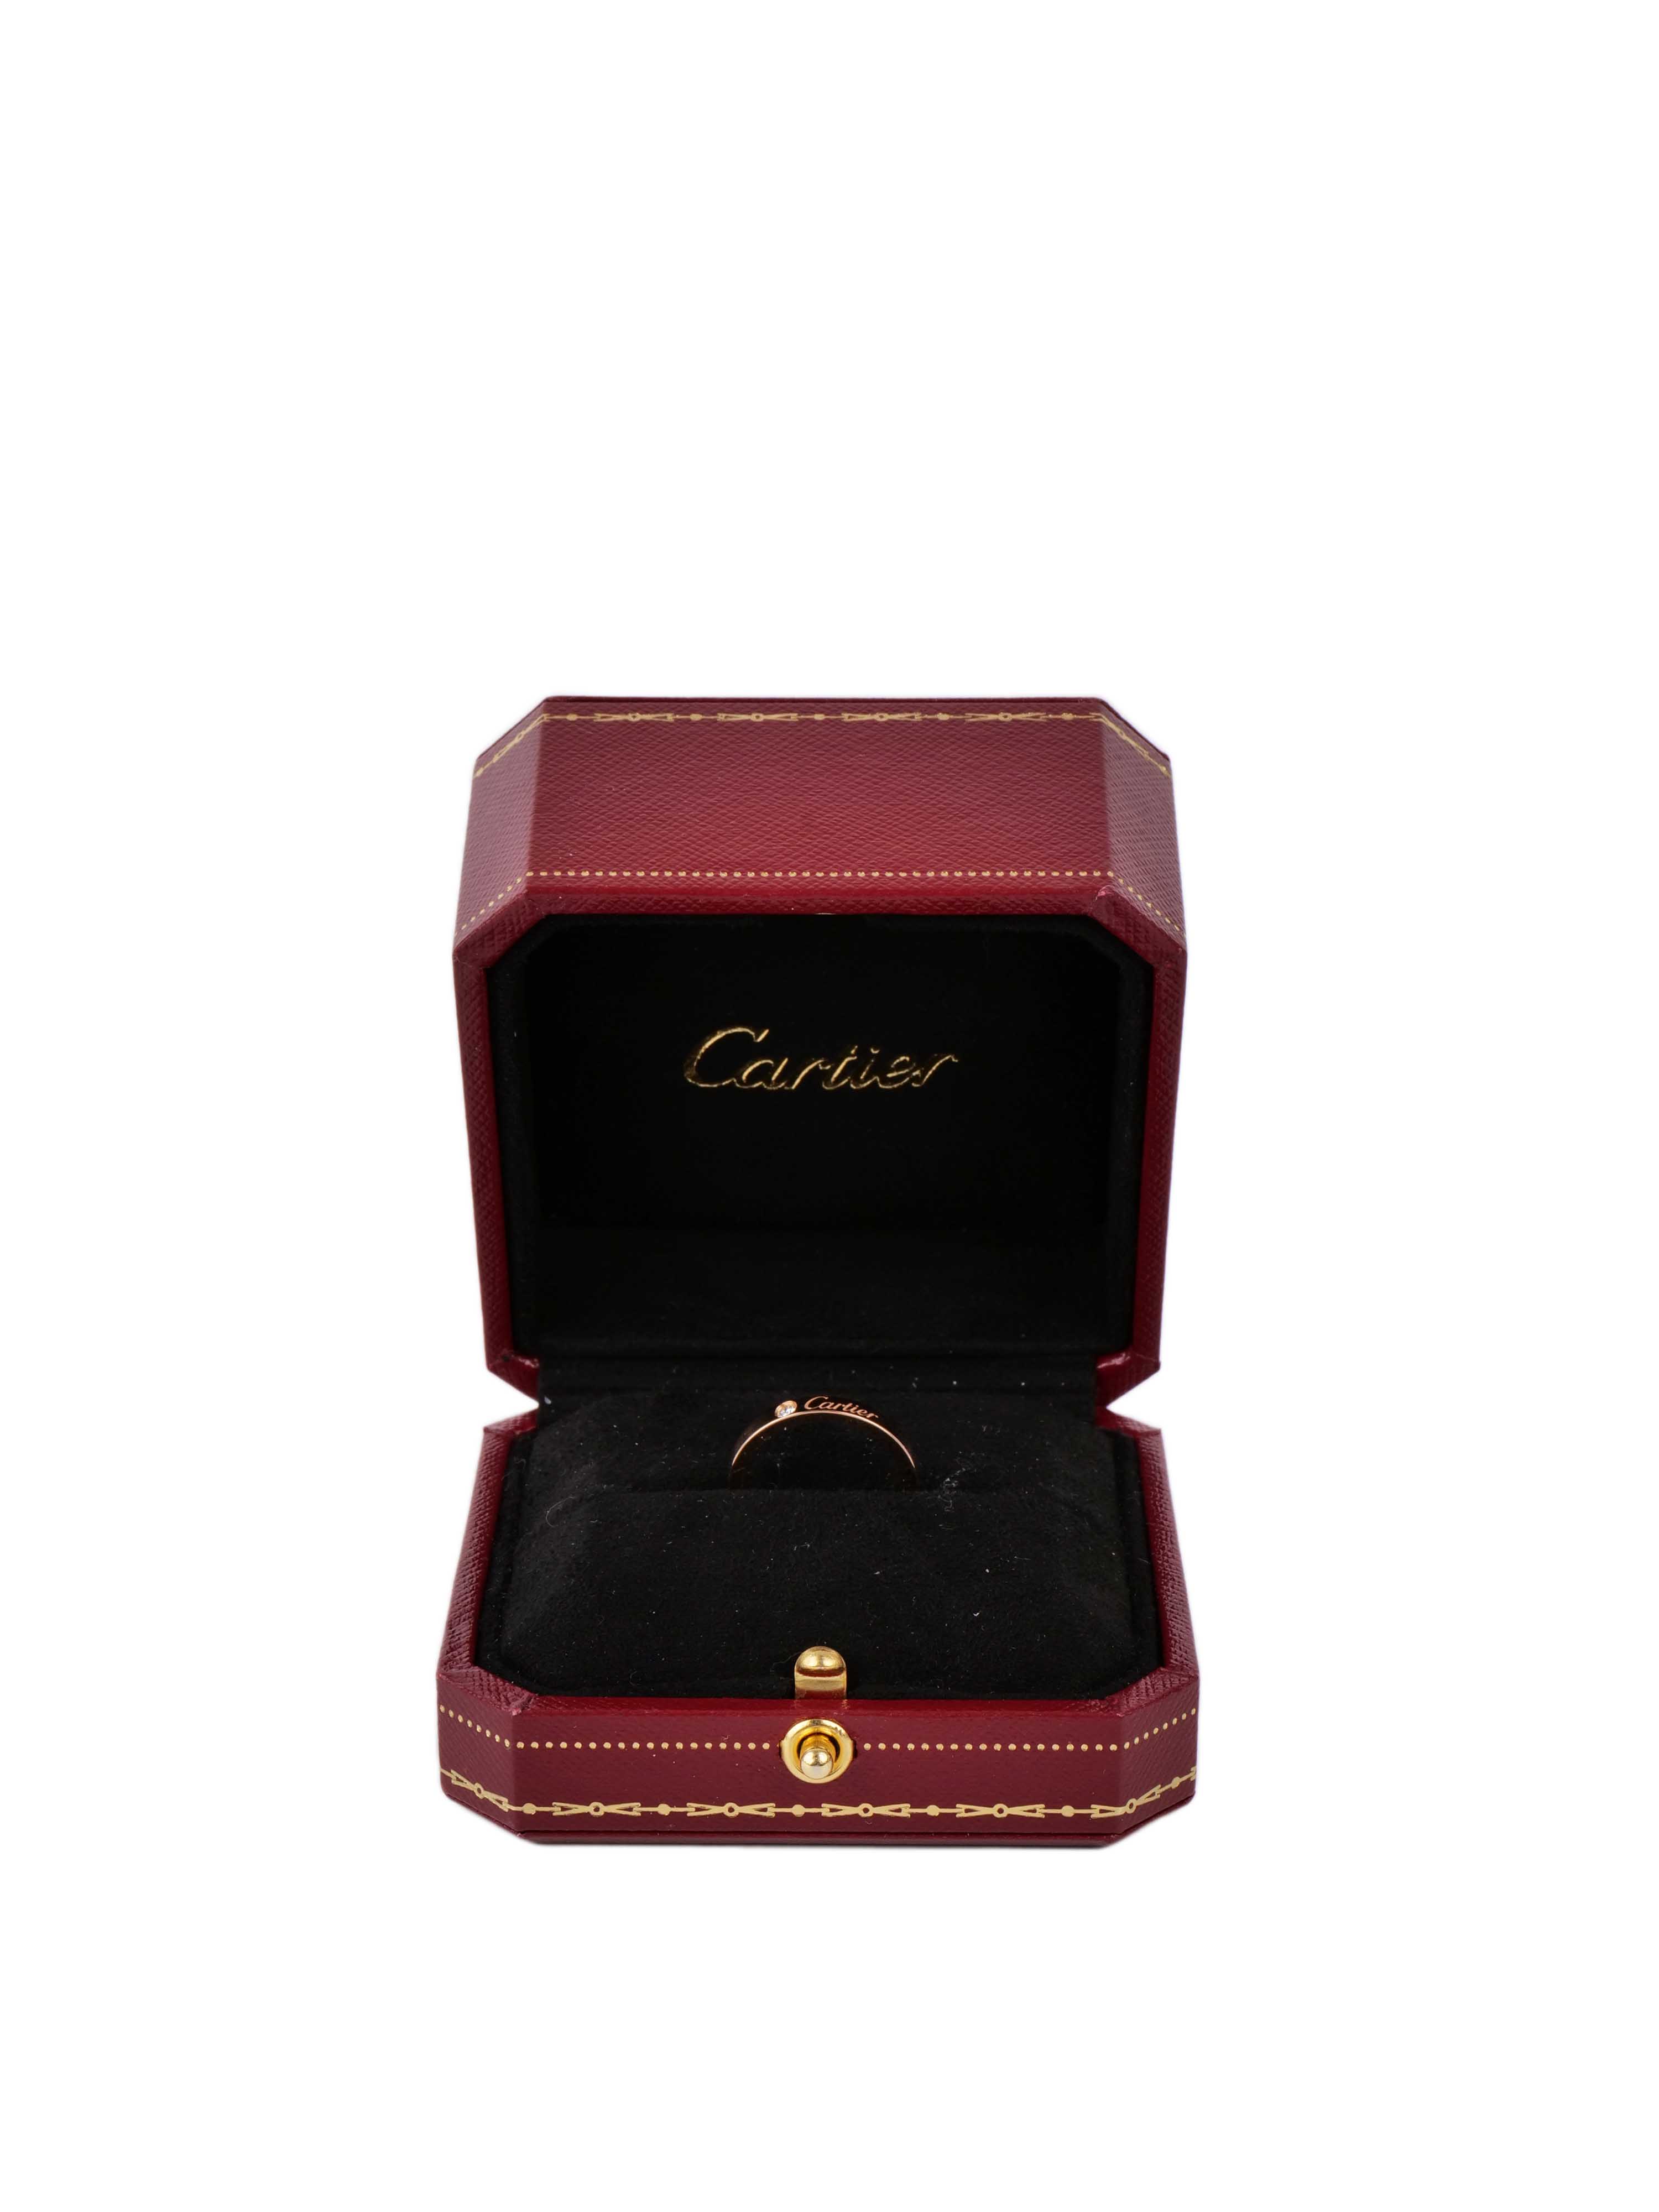 Cartier 18K Rose Gold Wedding Ring with 1 Diamond.